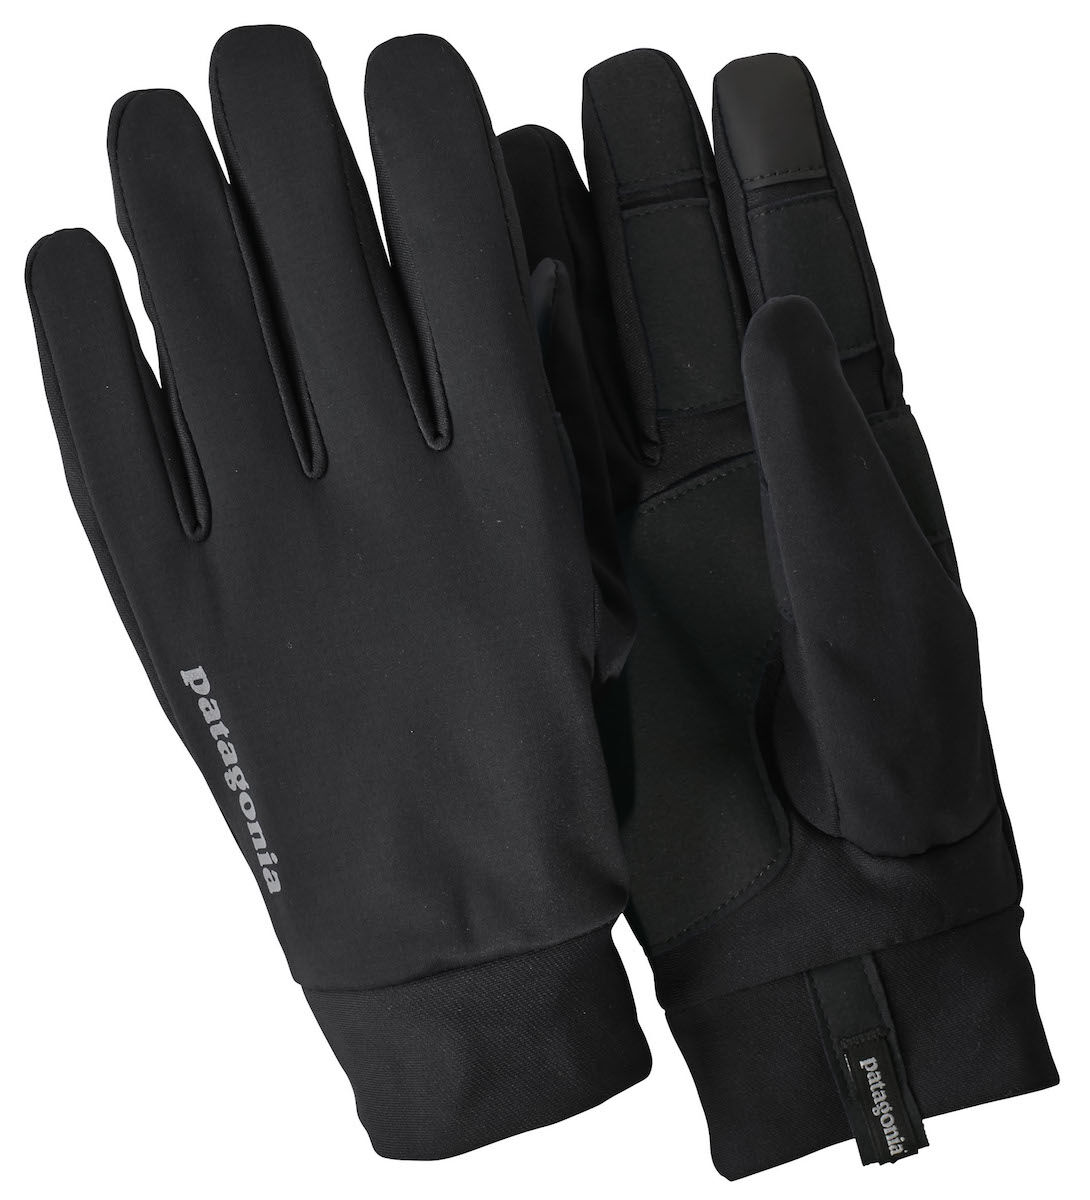 Patagonia - Wind Shield Gloves - Running gloves